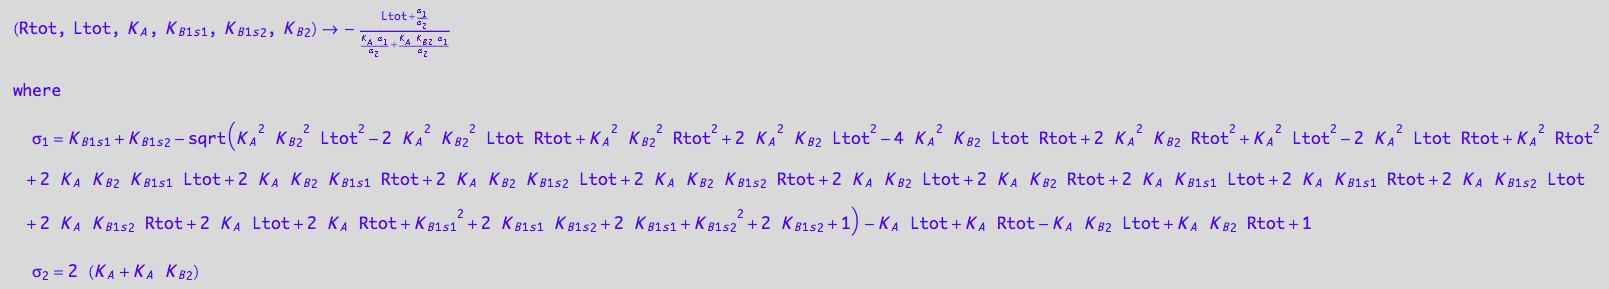 (Rtot, Ltot, K_A, K_B_1_s_1, K_B_1_s_2, K_B_2) -> -(Ltot + (K_B_1_s_1 + K_B_1_s_2 - (K_A^2*K_B_2^2*Ltot^2 - 2*K_A^2*K_B_2^2*Ltot*Rtot + K_A^2*K_B_2^2*Rtot^2 + 2*K_A^2*K_B_2*Ltot^2 - 4*K_A^2*K_B_2*Ltot*Rtot + 2*K_A^2*K_B_2*Rtot^2 + K_A^2*Ltot^2 - 2*K_A^2*Ltot*Rtot + K_A^2*Rtot^2 + 2*K_A*K_B_2*K_B_1_s_1*Ltot + 2*K_A*K_B_2*K_B_1_s_1*Rtot + 2*K_A*K_B_2*K_B_1_s_2*Ltot + 2*K_A*K_B_2*K_B_1_s_2*Rtot + 2*K_A*K_B_2*Ltot + 2*K_A*K_B_2*Rtot + 2*K_A*K_B_1_s_1*Ltot + 2*K_A*K_B_1_s_1*Rtot + 2*K_A*K_B_1_s_2*Ltot + 2*K_A*K_B_1_s_2*Rtot + 2*K_A*Ltot + 2*K_A*Rtot + K_B_1_s_1^2 + 2*K_B_1_s_1*K_B_1_s_2 + 2*K_B_1_s_1 + K_B_1_s_2^2 + 2*K_B_1_s_2 + 1)^(1/2) - K_A*Ltot + K_A*Rtot - K_A*K_B_2*Ltot + K_A*K_B_2*Rtot + 1)/(2*(K_A + K_A*K_B_2)))/((K_A*(K_B_1_s_1 + K_B_1_s_2 - (K_A^2*K_B_2^2*Ltot^2 - 2*K_A^2*K_B_2^2*Ltot*Rtot + K_A^2*K_B_2^2*Rtot^2 + 2*K_A^2*K_B_2*Ltot^2 - 4*K_A^2*K_B_2*Ltot*Rtot + 2*K_A^2*K_B_2*Rtot^2 + K_A^2*Ltot^2 - 2*K_A^2*Ltot*Rtot + K_A^2*Rtot^2 + 2*K_A*K_B_2*K_B_1_s_1*Ltot + 2*K_A*K_B_2*K_B_1_s_1*Rtot + 2*K_A*K_B_2*K_B_1_s_2*Ltot + 2*K_A*K_B_2*K_B_1_s_2*Rtot + 2*K_A*K_B_2*Ltot + 2*K_A*K_B_2*Rtot + 2*K_A*K_B_1_s_1*Ltot + 2*K_A*K_B_1_s_1*Rtot + 2*K_A*K_B_1_s_2*Ltot + 2*K_A*K_B_1_s_2*Rtot + 2*K_A*Ltot + 2*K_A*Rtot + K_B_1_s_1^2 + 2*K_B_1_s_1*K_B_1_s_2 + 2*K_B_1_s_1 + K_B_1_s_2^2 + 2*K_B_1_s_2 + 1)^(1/2) - K_A*Ltot + K_A*Rtot - K_A*K_B_2*Ltot + K_A*K_B_2*Rtot + 1))/(2*(K_A + K_A*K_B_2)) + (K_A*K_B_2*(K_B_1_s_1 + K_B_1_s_2 - (K_A^2*K_B_2^2*Ltot^2 - 2*K_A^2*K_B_2^2*Ltot*Rtot + K_A^2*K_B_2^2*Rtot^2 + 2*K_A^2*K_B_2*Ltot^2 - 4*K_A^2*K_B_2*Ltot*Rtot + 2*K_A^2*K_B_2*Rtot^2 + K_A^2*Ltot^2 - 2*K_A^2*Ltot*Rtot + K_A^2*Rtot^2 + 2*K_A*K_B_2*K_B_1_s_1*Ltot + 2*K_A*K_B_2*K_B_1_s_1*Rtot + 2*K_A*K_B_2*K_B_1_s_2*Ltot + 2*K_A*K_B_2*K_B_1_s_2*Rtot + 2*K_A*K_B_2*Ltot + 2*K_A*K_B_2*Rtot + 2*K_A*K_B_1_s_1*Ltot + 2*K_A*K_B_1_s_1*Rtot + 2*K_A*K_B_1_s_2*Ltot + 2*K_A*K_B_1_s_2*Rtot + 2*K_A*Ltot + 2*K_A*Rtot + K_B_1_s_1^2 + 2*K_B_1_s_1*K_B_1_s_2 + 2*K_B_1_s_1 + K_B_1_s_2^2 + 2*K_B_1_s_2 + 1)^(1/2) - K_A*Ltot + K_A*Rtot - K_A*K_B_2*Ltot + K_A*K_B_2*Rtot + 1))/(2*(K_A + K_A*K_B_2)))